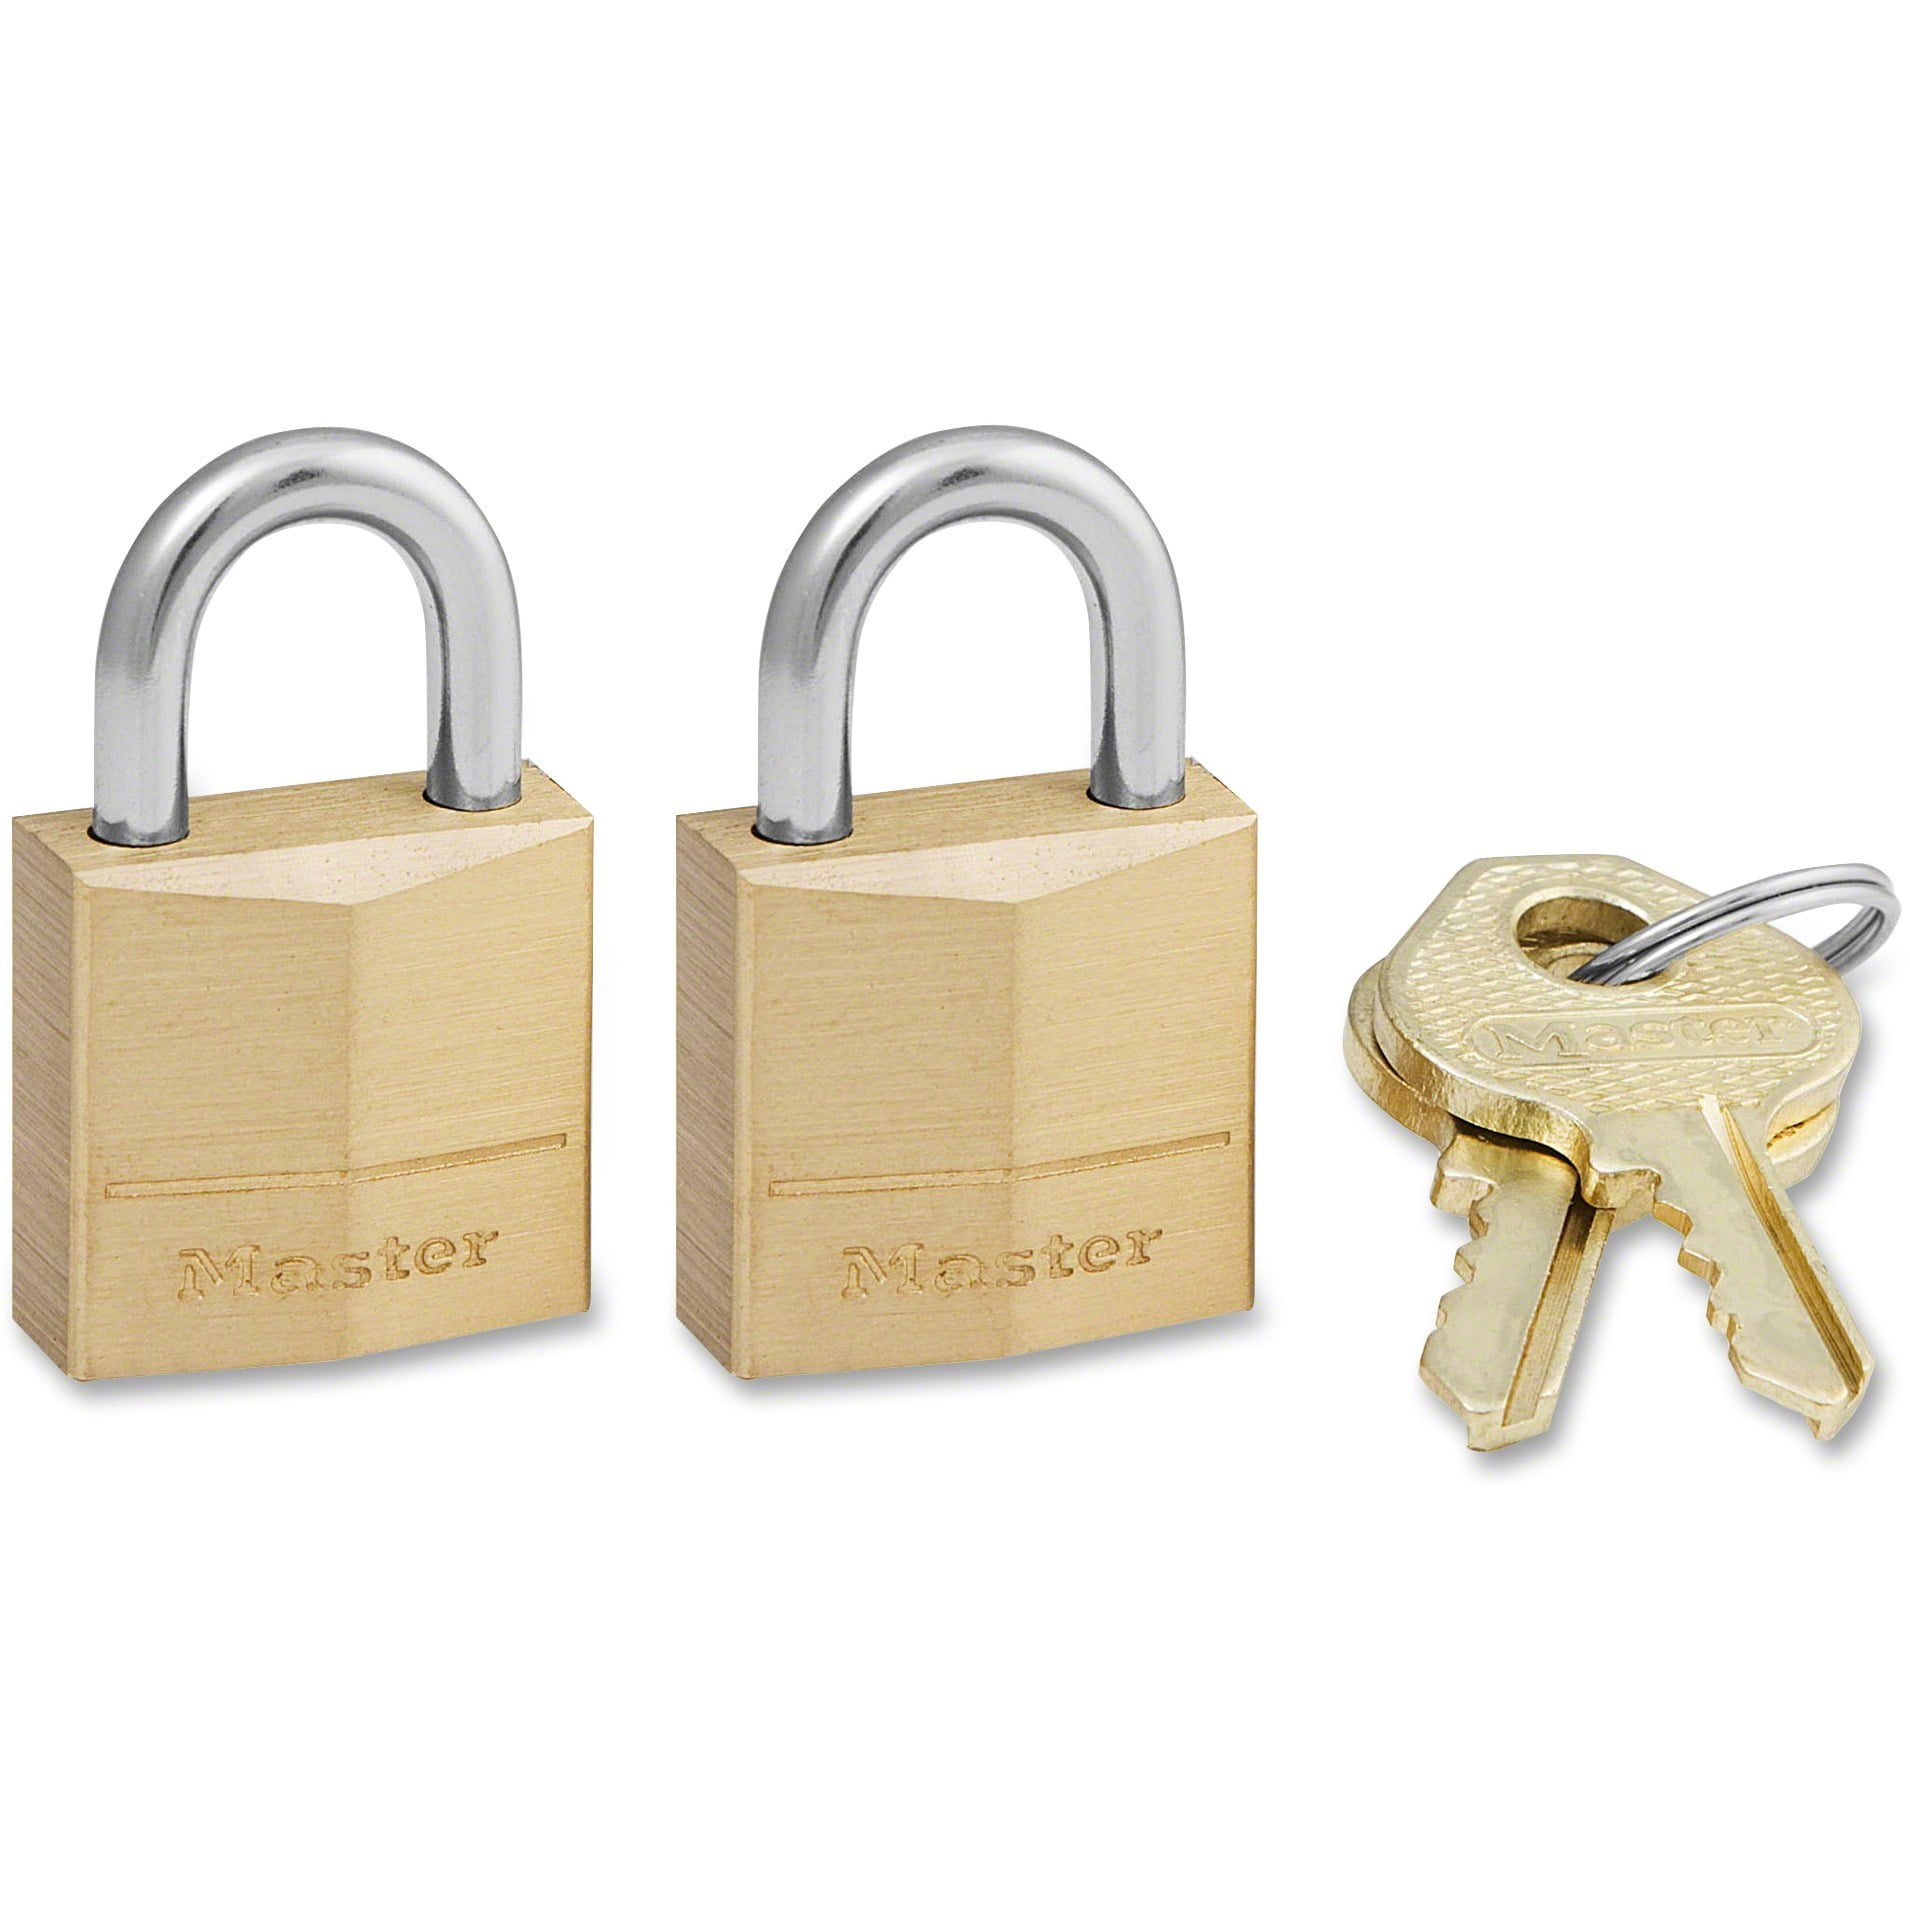 5 Masterlock Warded Padlock Keyed Key Master Lock 500D Steel Tough for sale online 